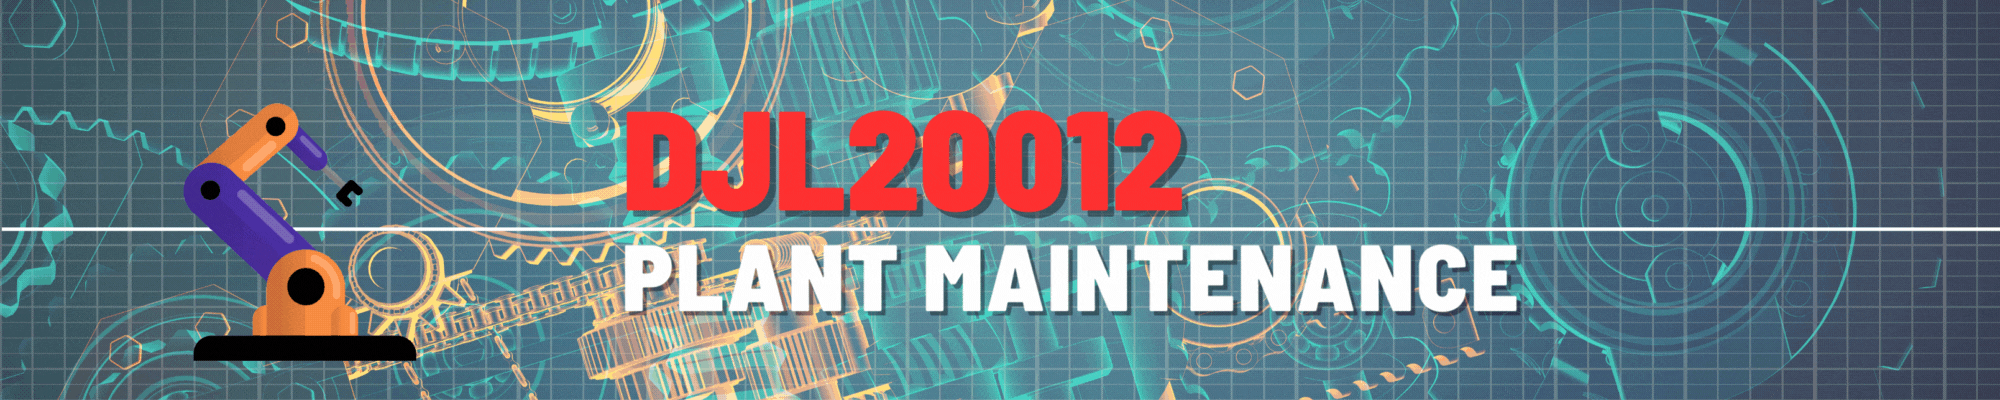 DJL20012 PLANT MAINTENANCE